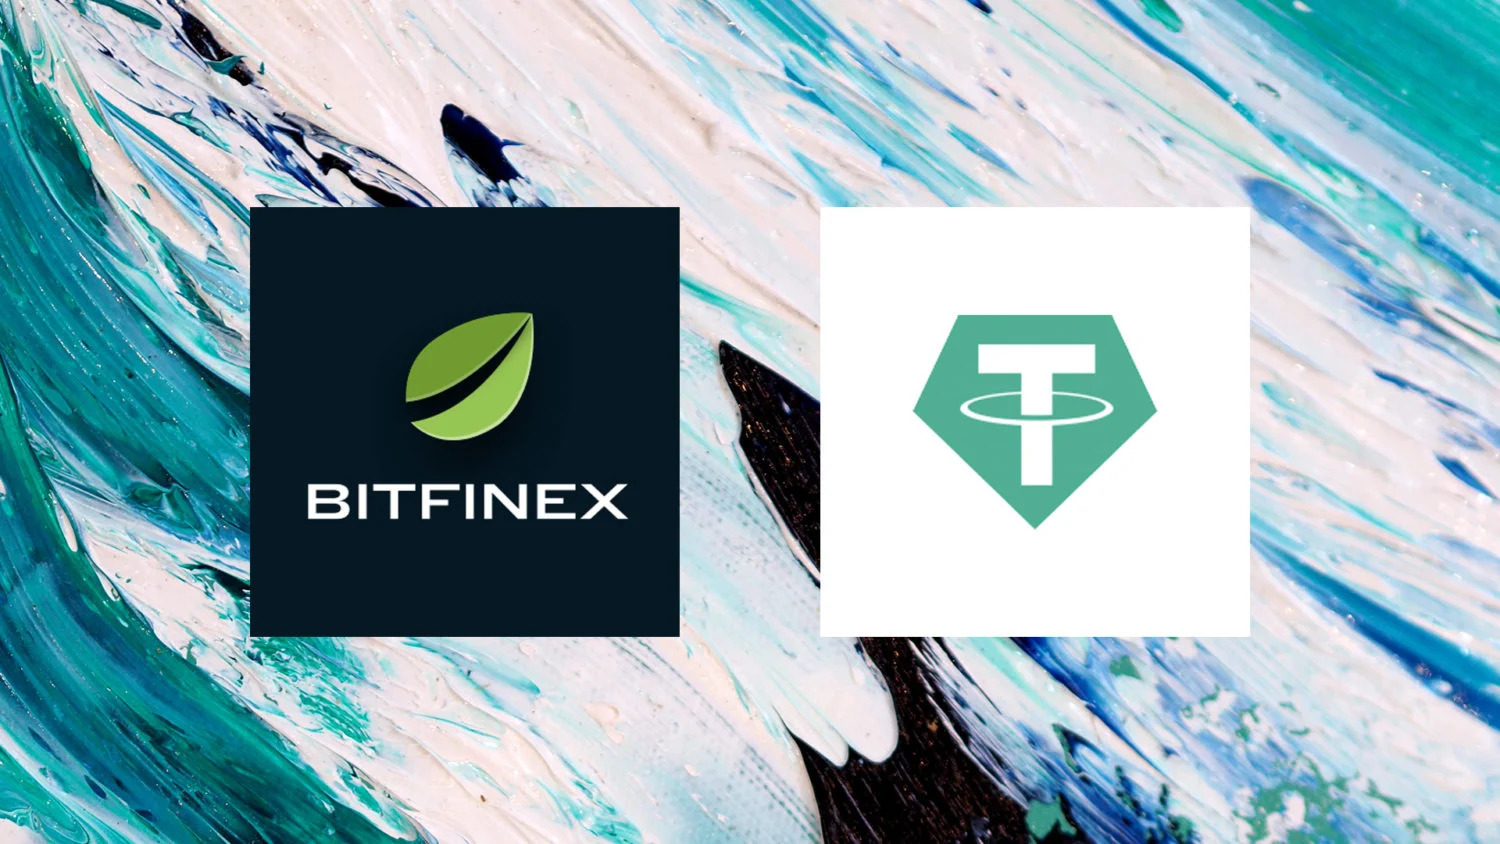 Tether, Bitfinex and Hypercore launch P2P app building platforms